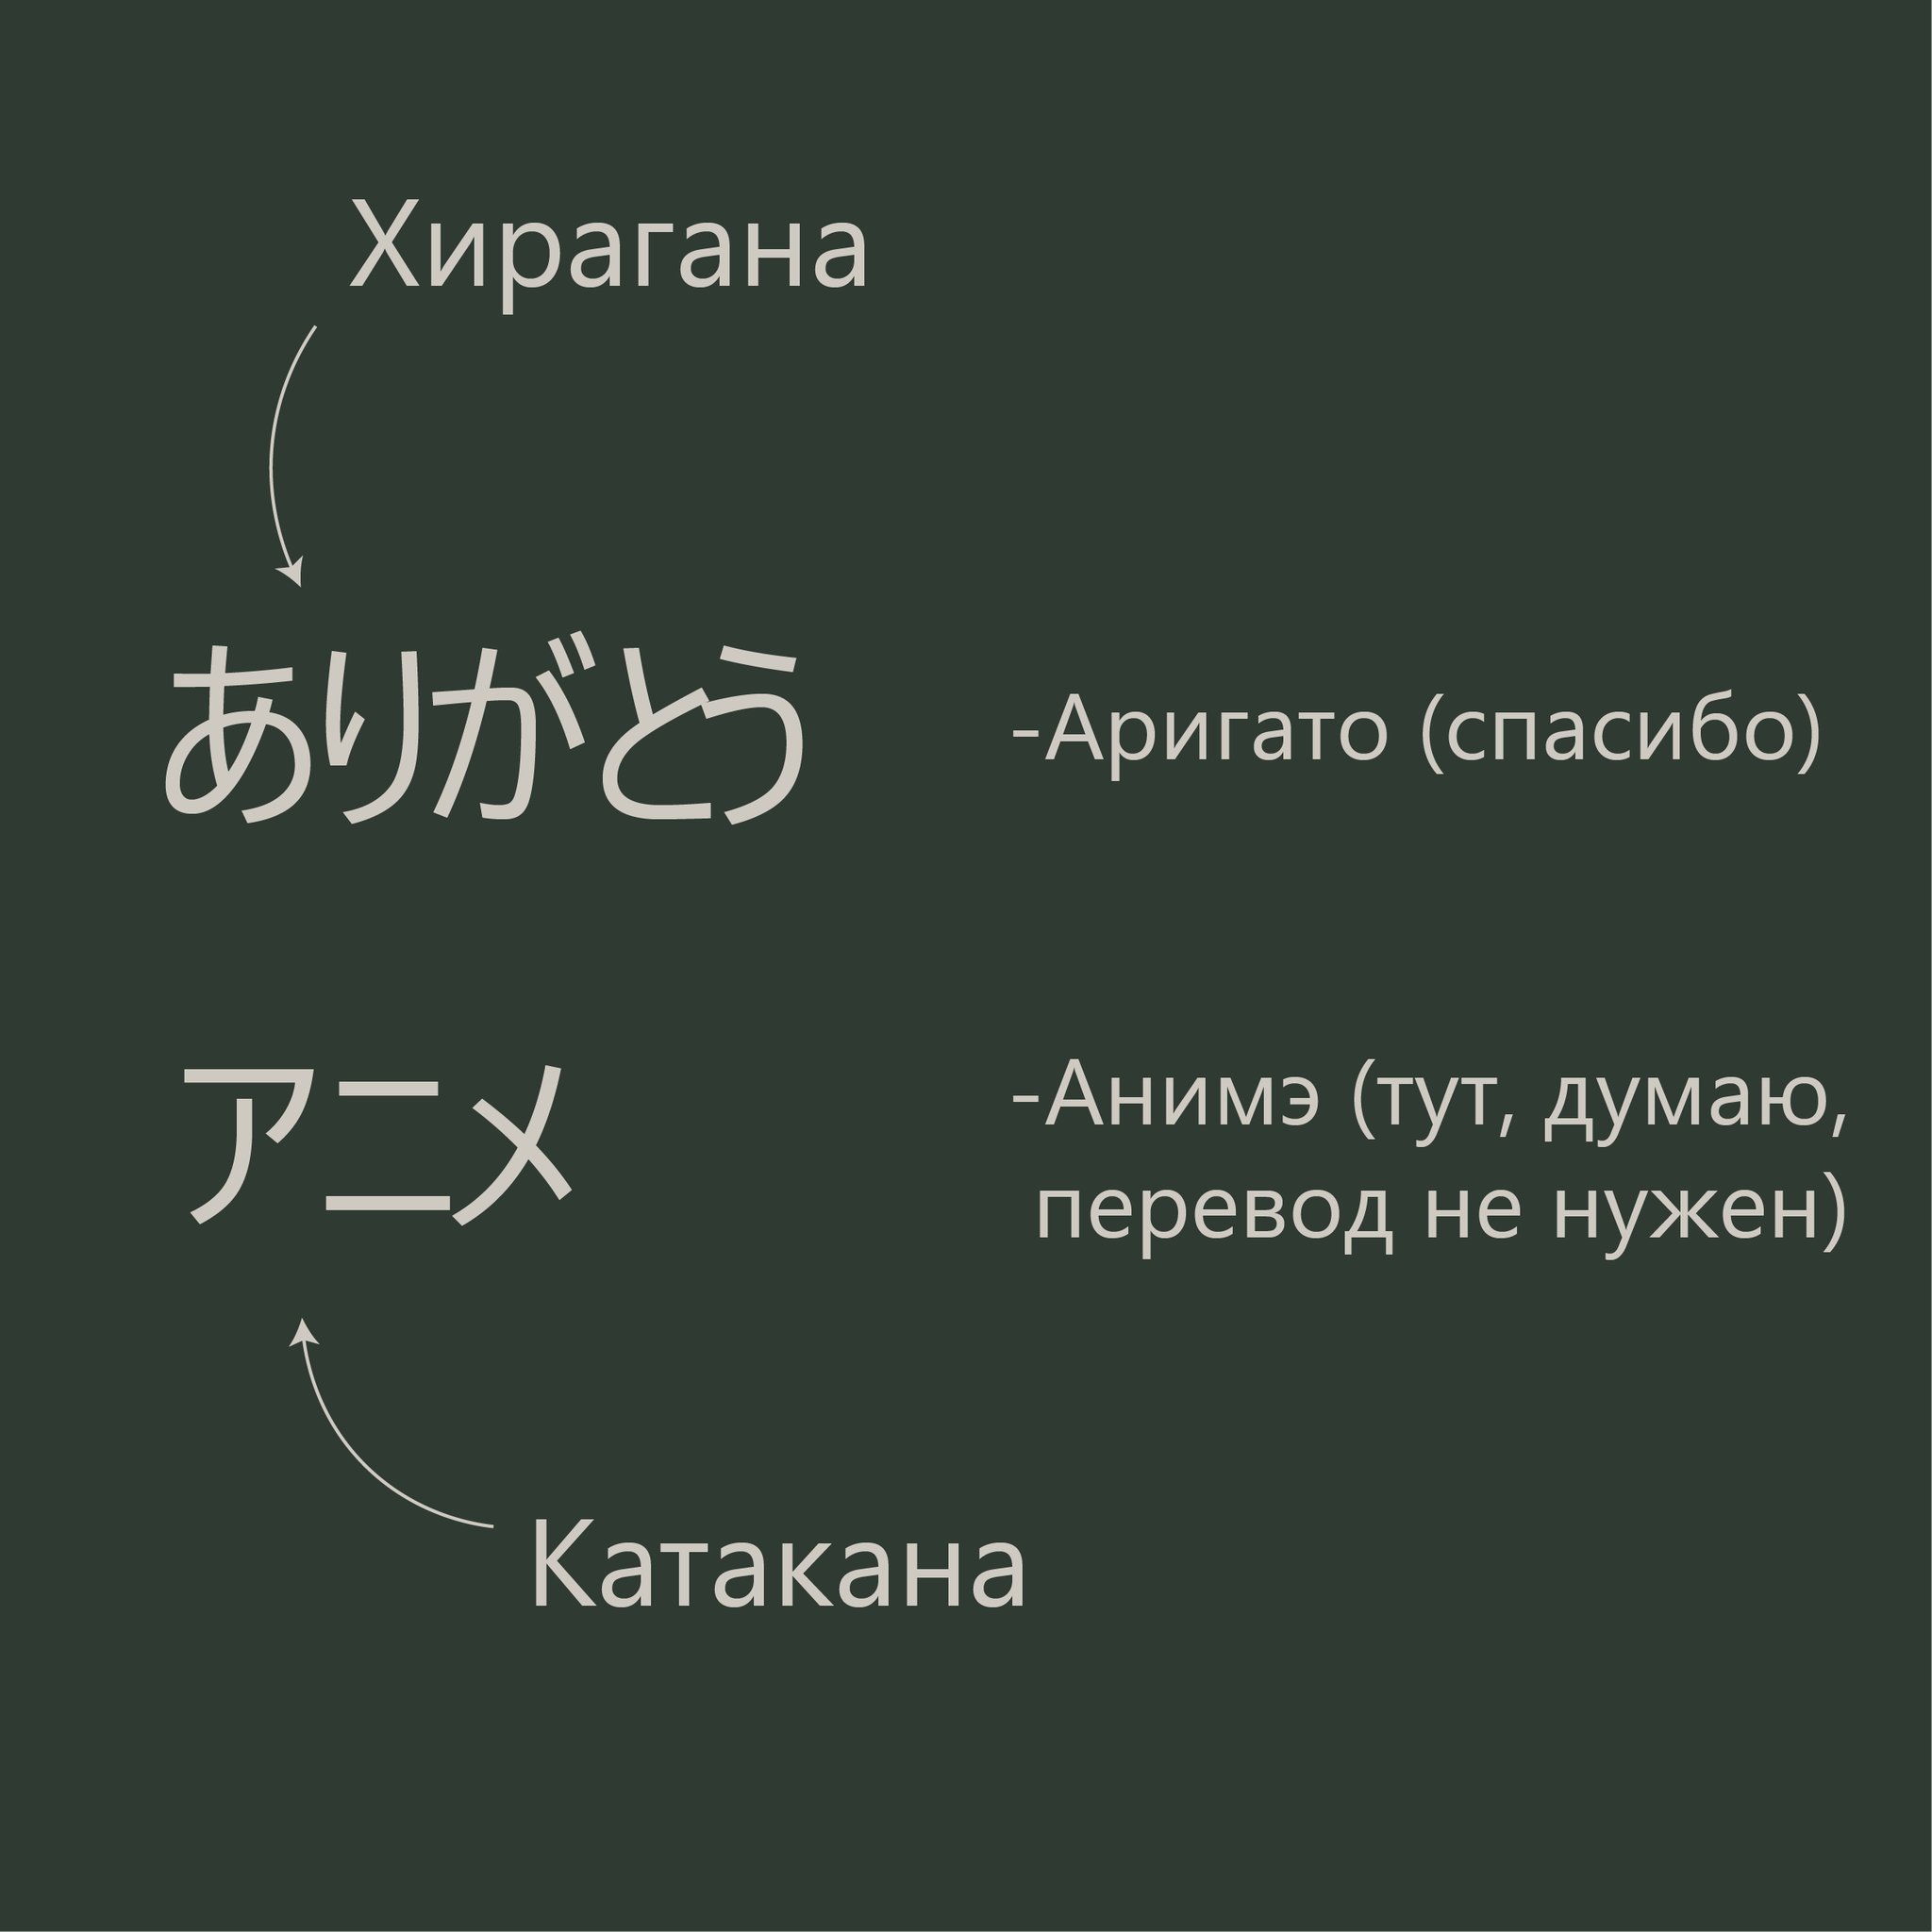 Перевод Японских Иероглифов На Русский По Фото